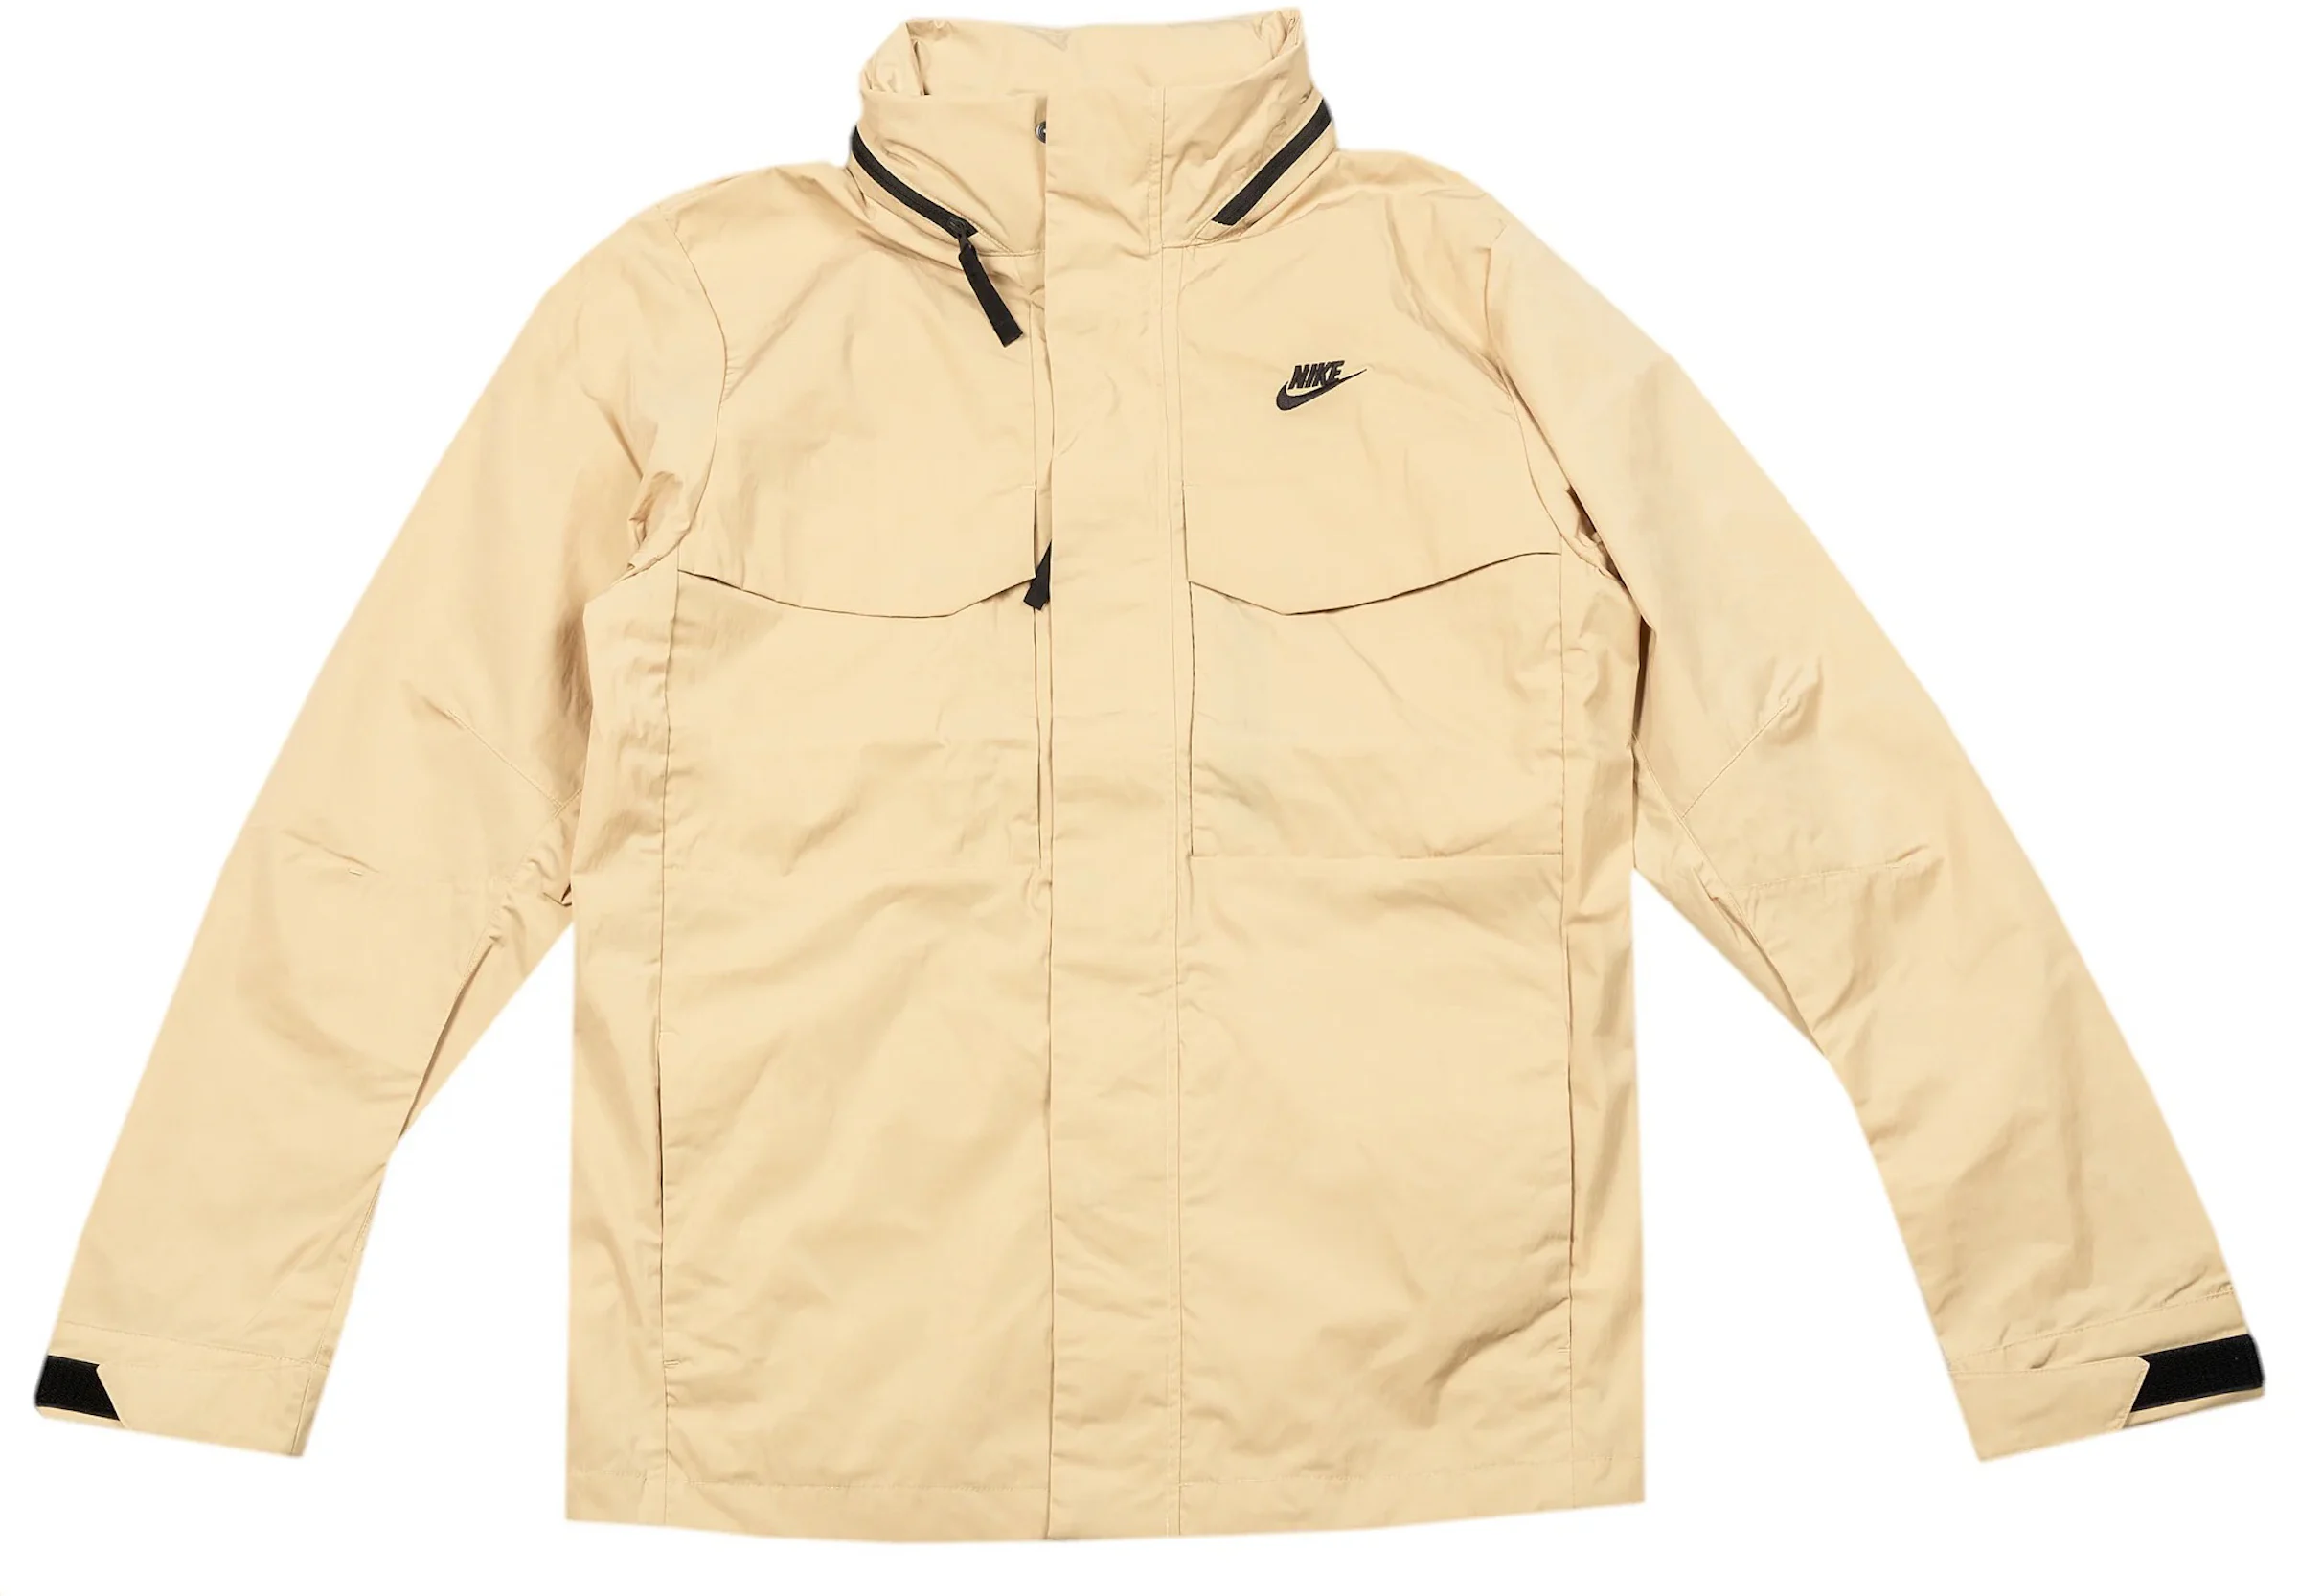 Nike Sportswear Windrunner Hooded Jacket Light Orewood Brown / Sail - Black